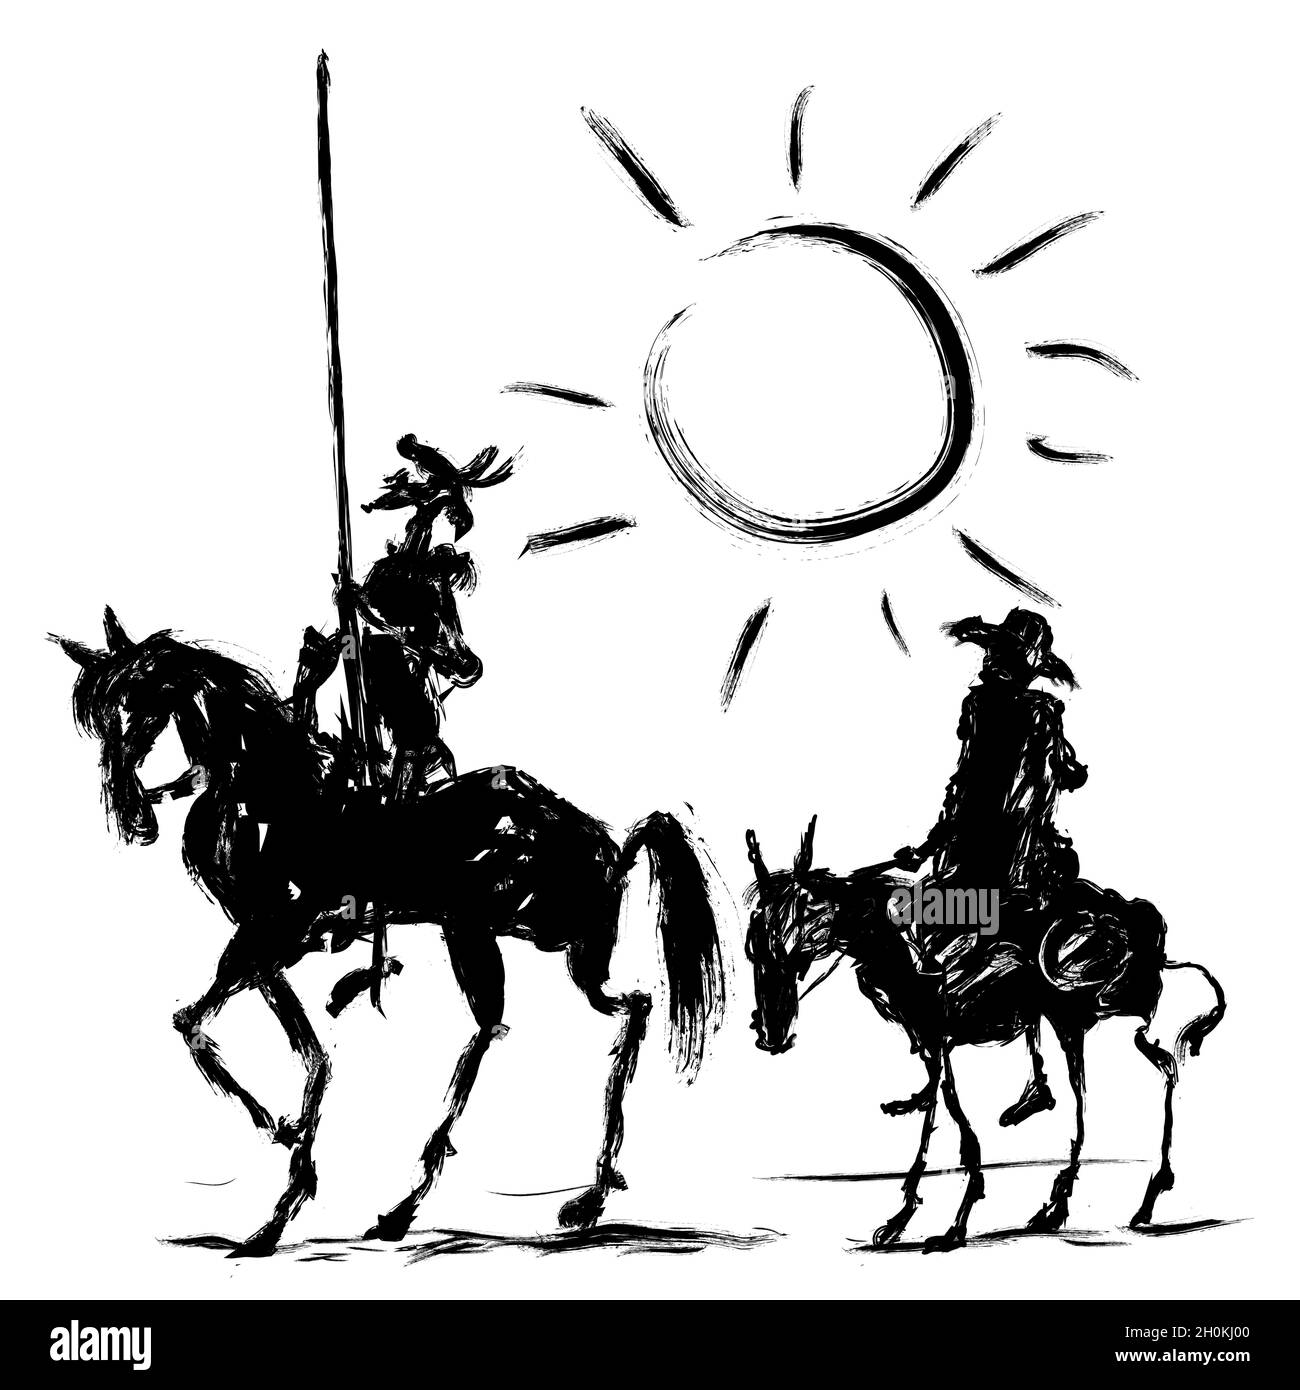 A representation of silhouettes of Don Quixote and Sancho Panza.- vector illustration Stock Vector